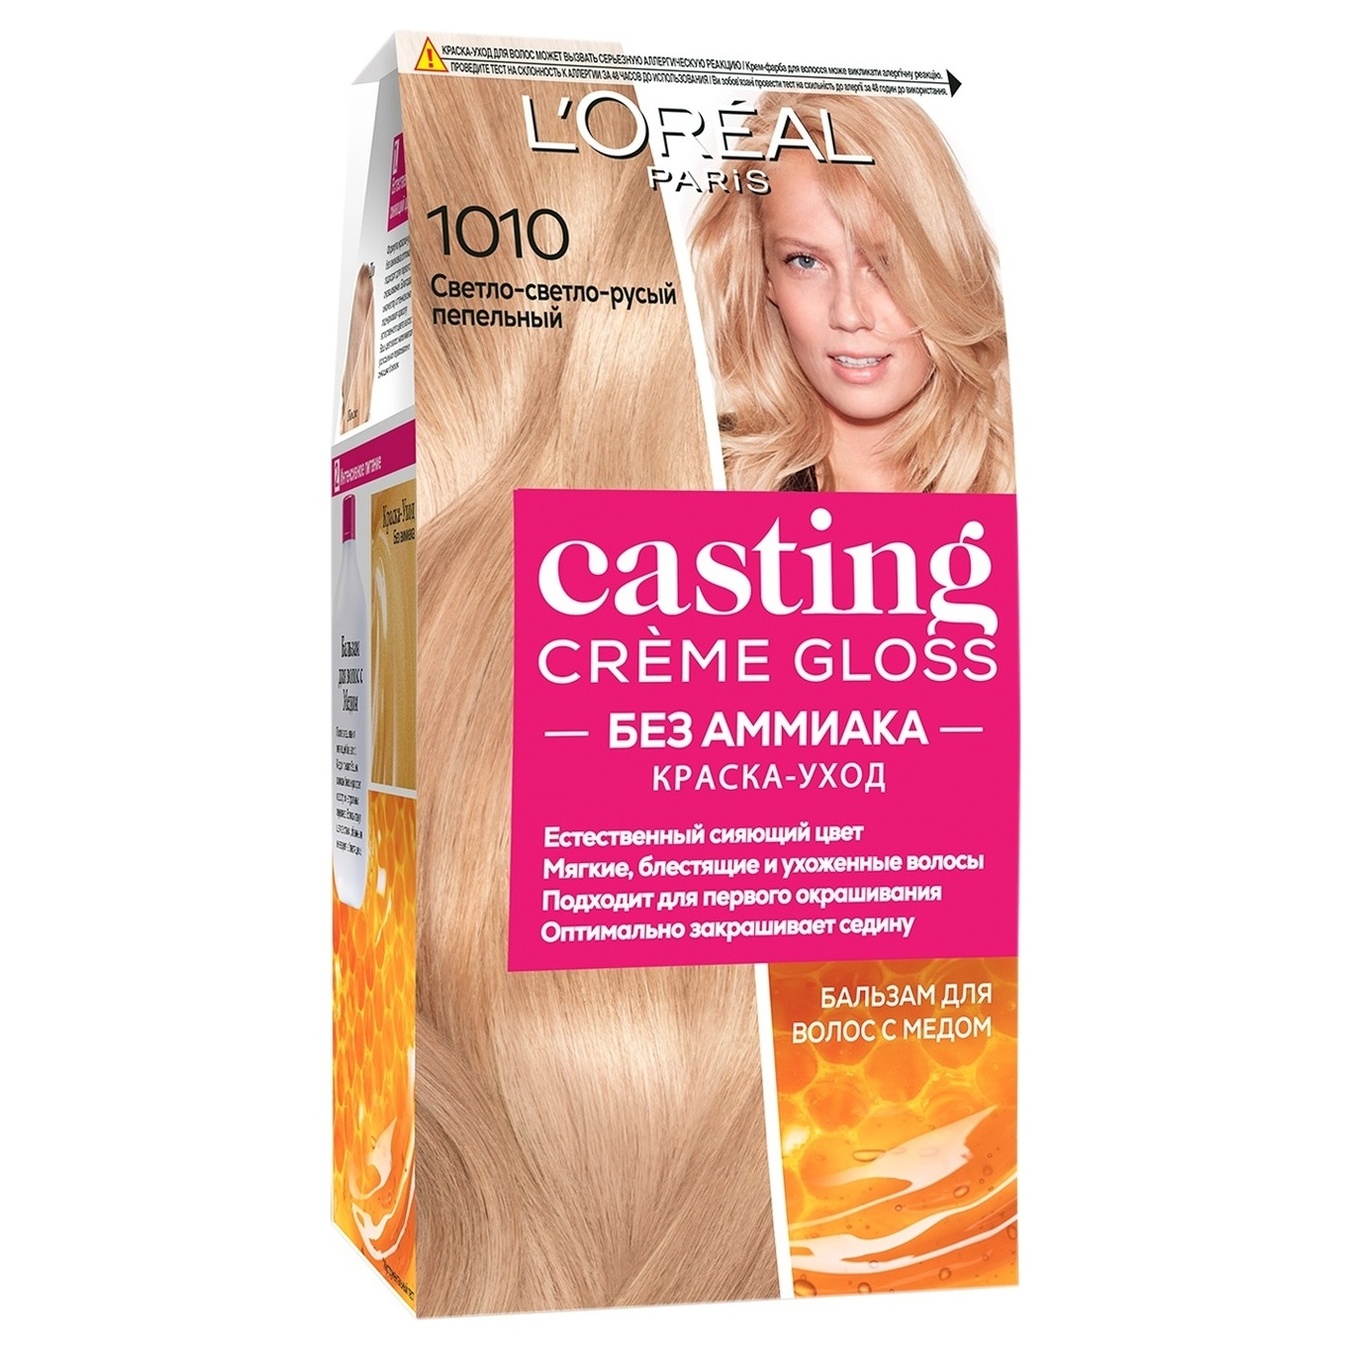 Loreal Casting Creme Gloss hair dye shade 1010